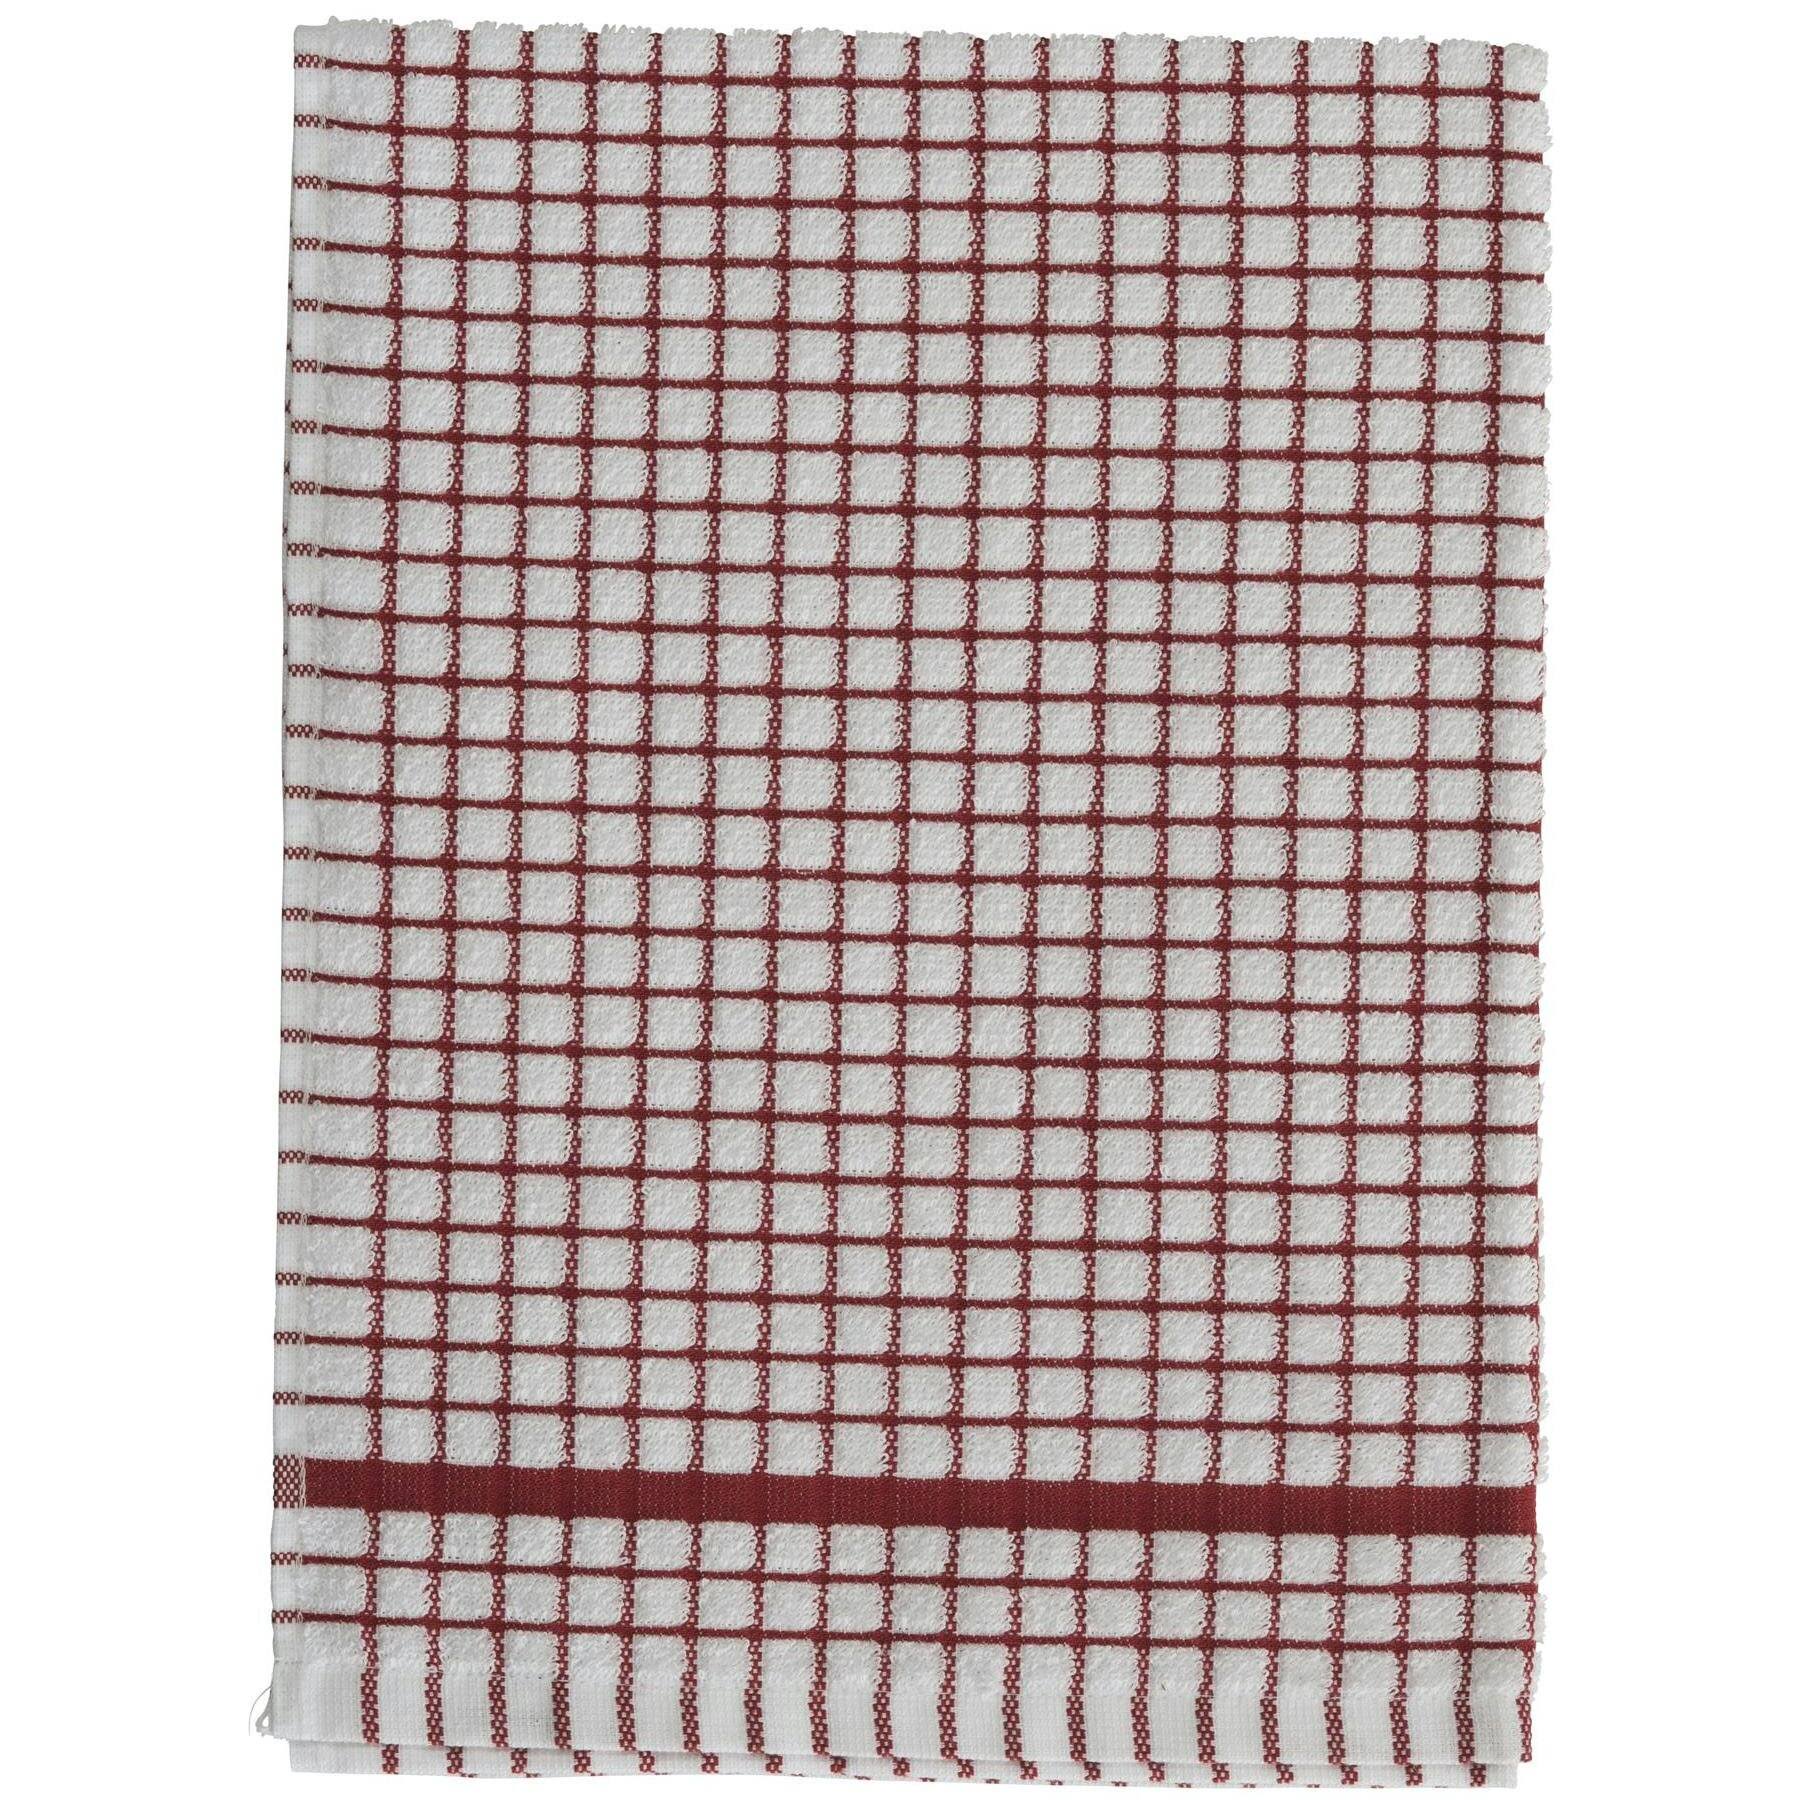 Lamont Poli Dri Premium Quality Kitchen Tea Towels - Red, 3 Pack